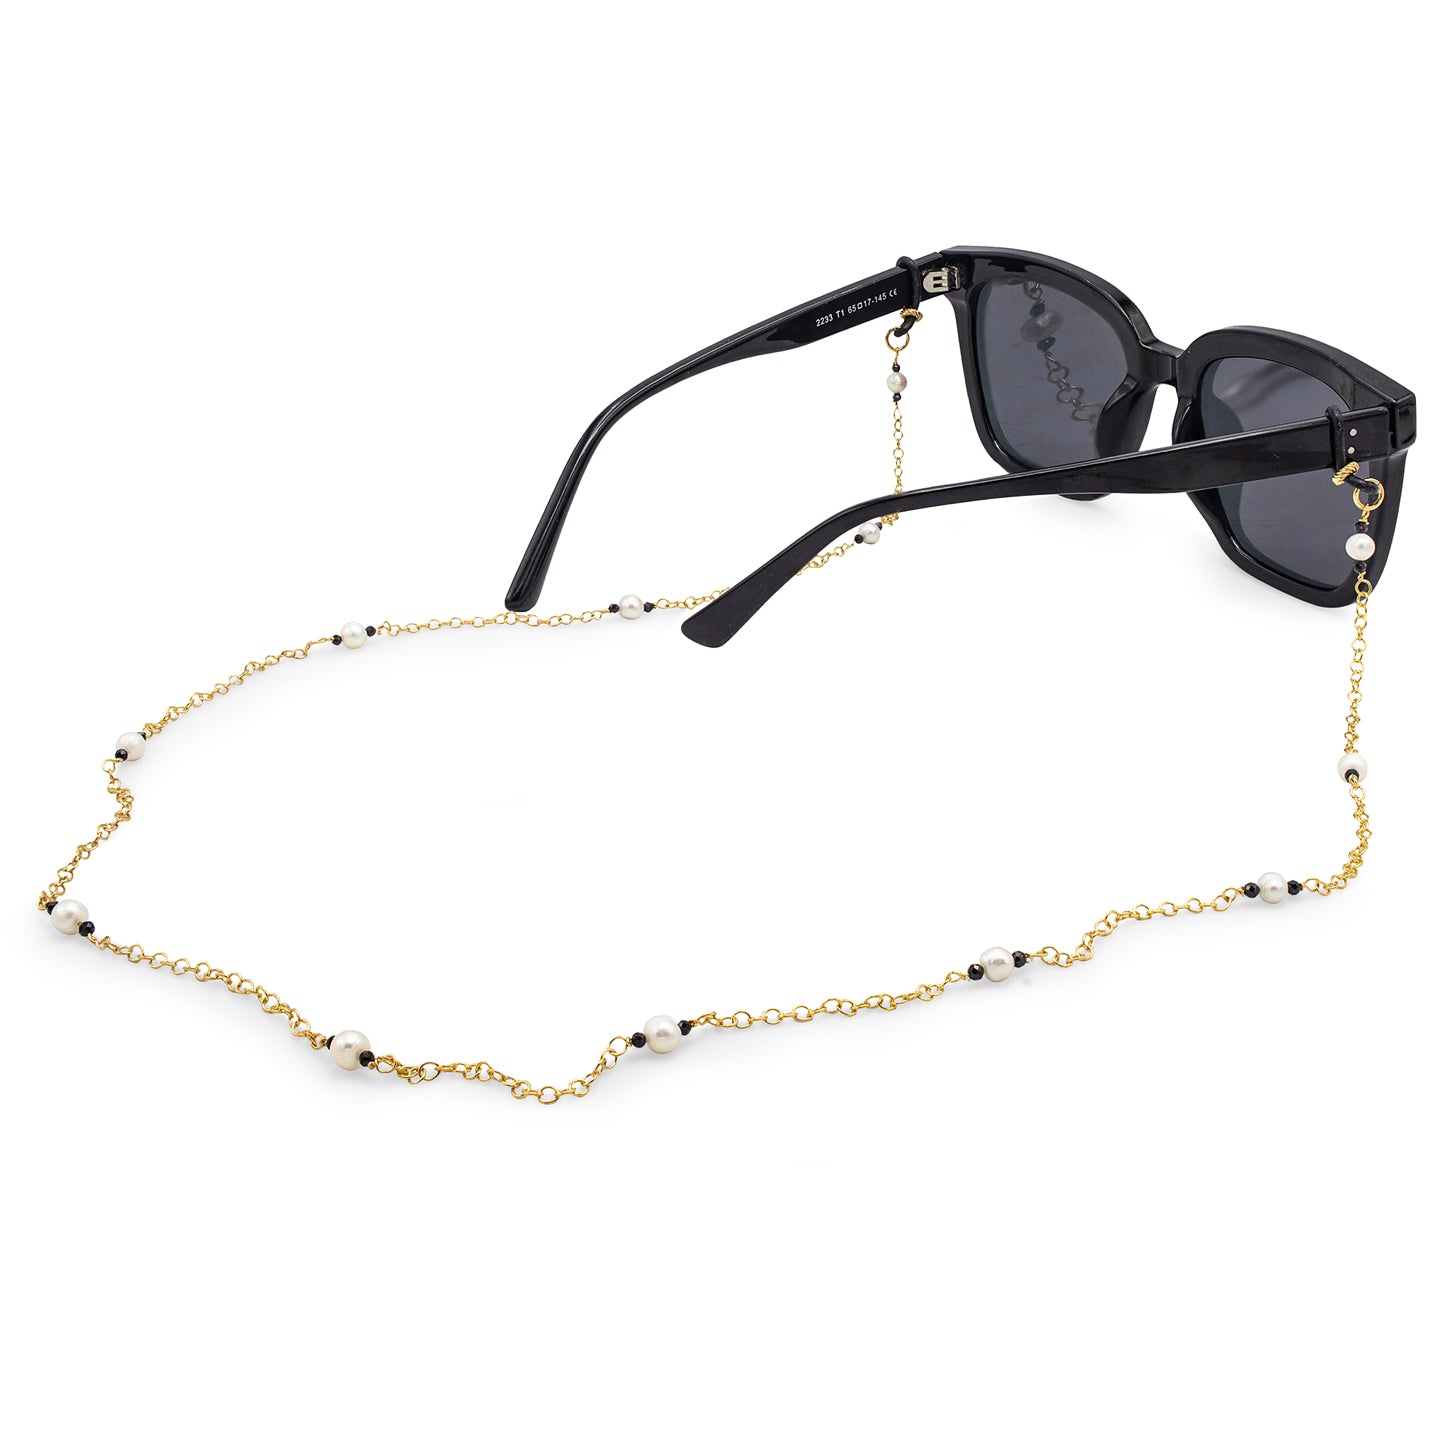 Lant ochelari argint cu perle Simply Elegant - placat aur galben 18K